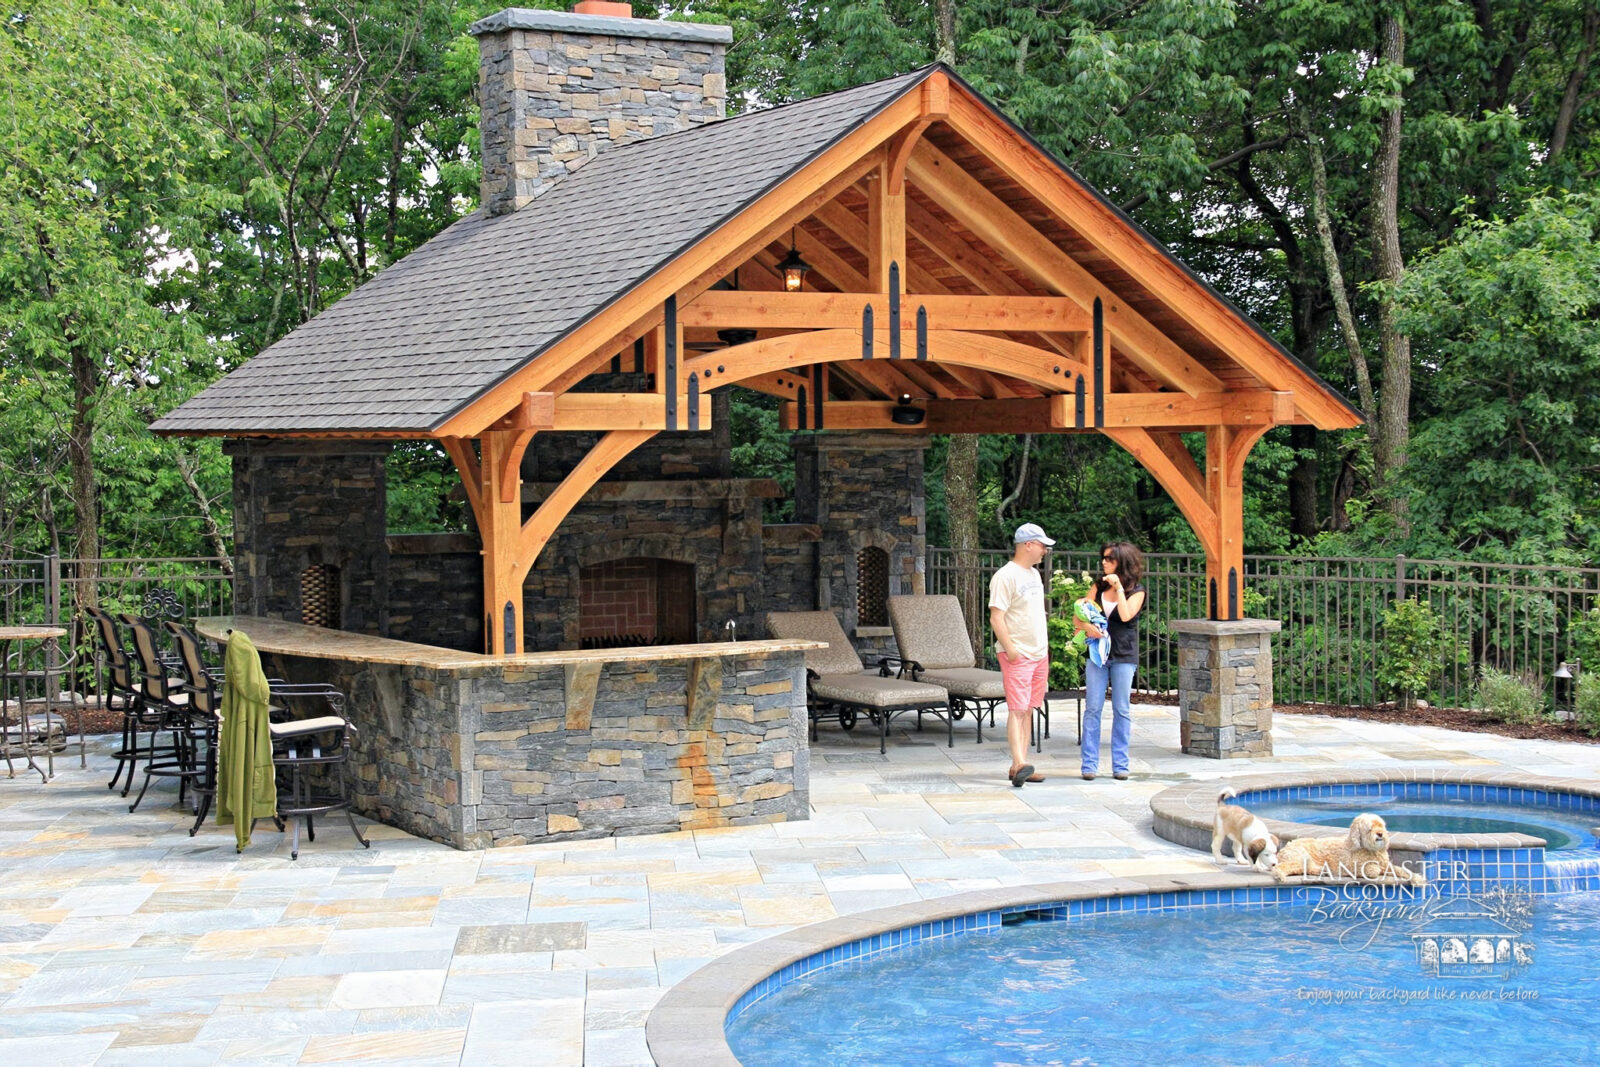 grand teton timber frame pavilion sitting poolside on a large patio